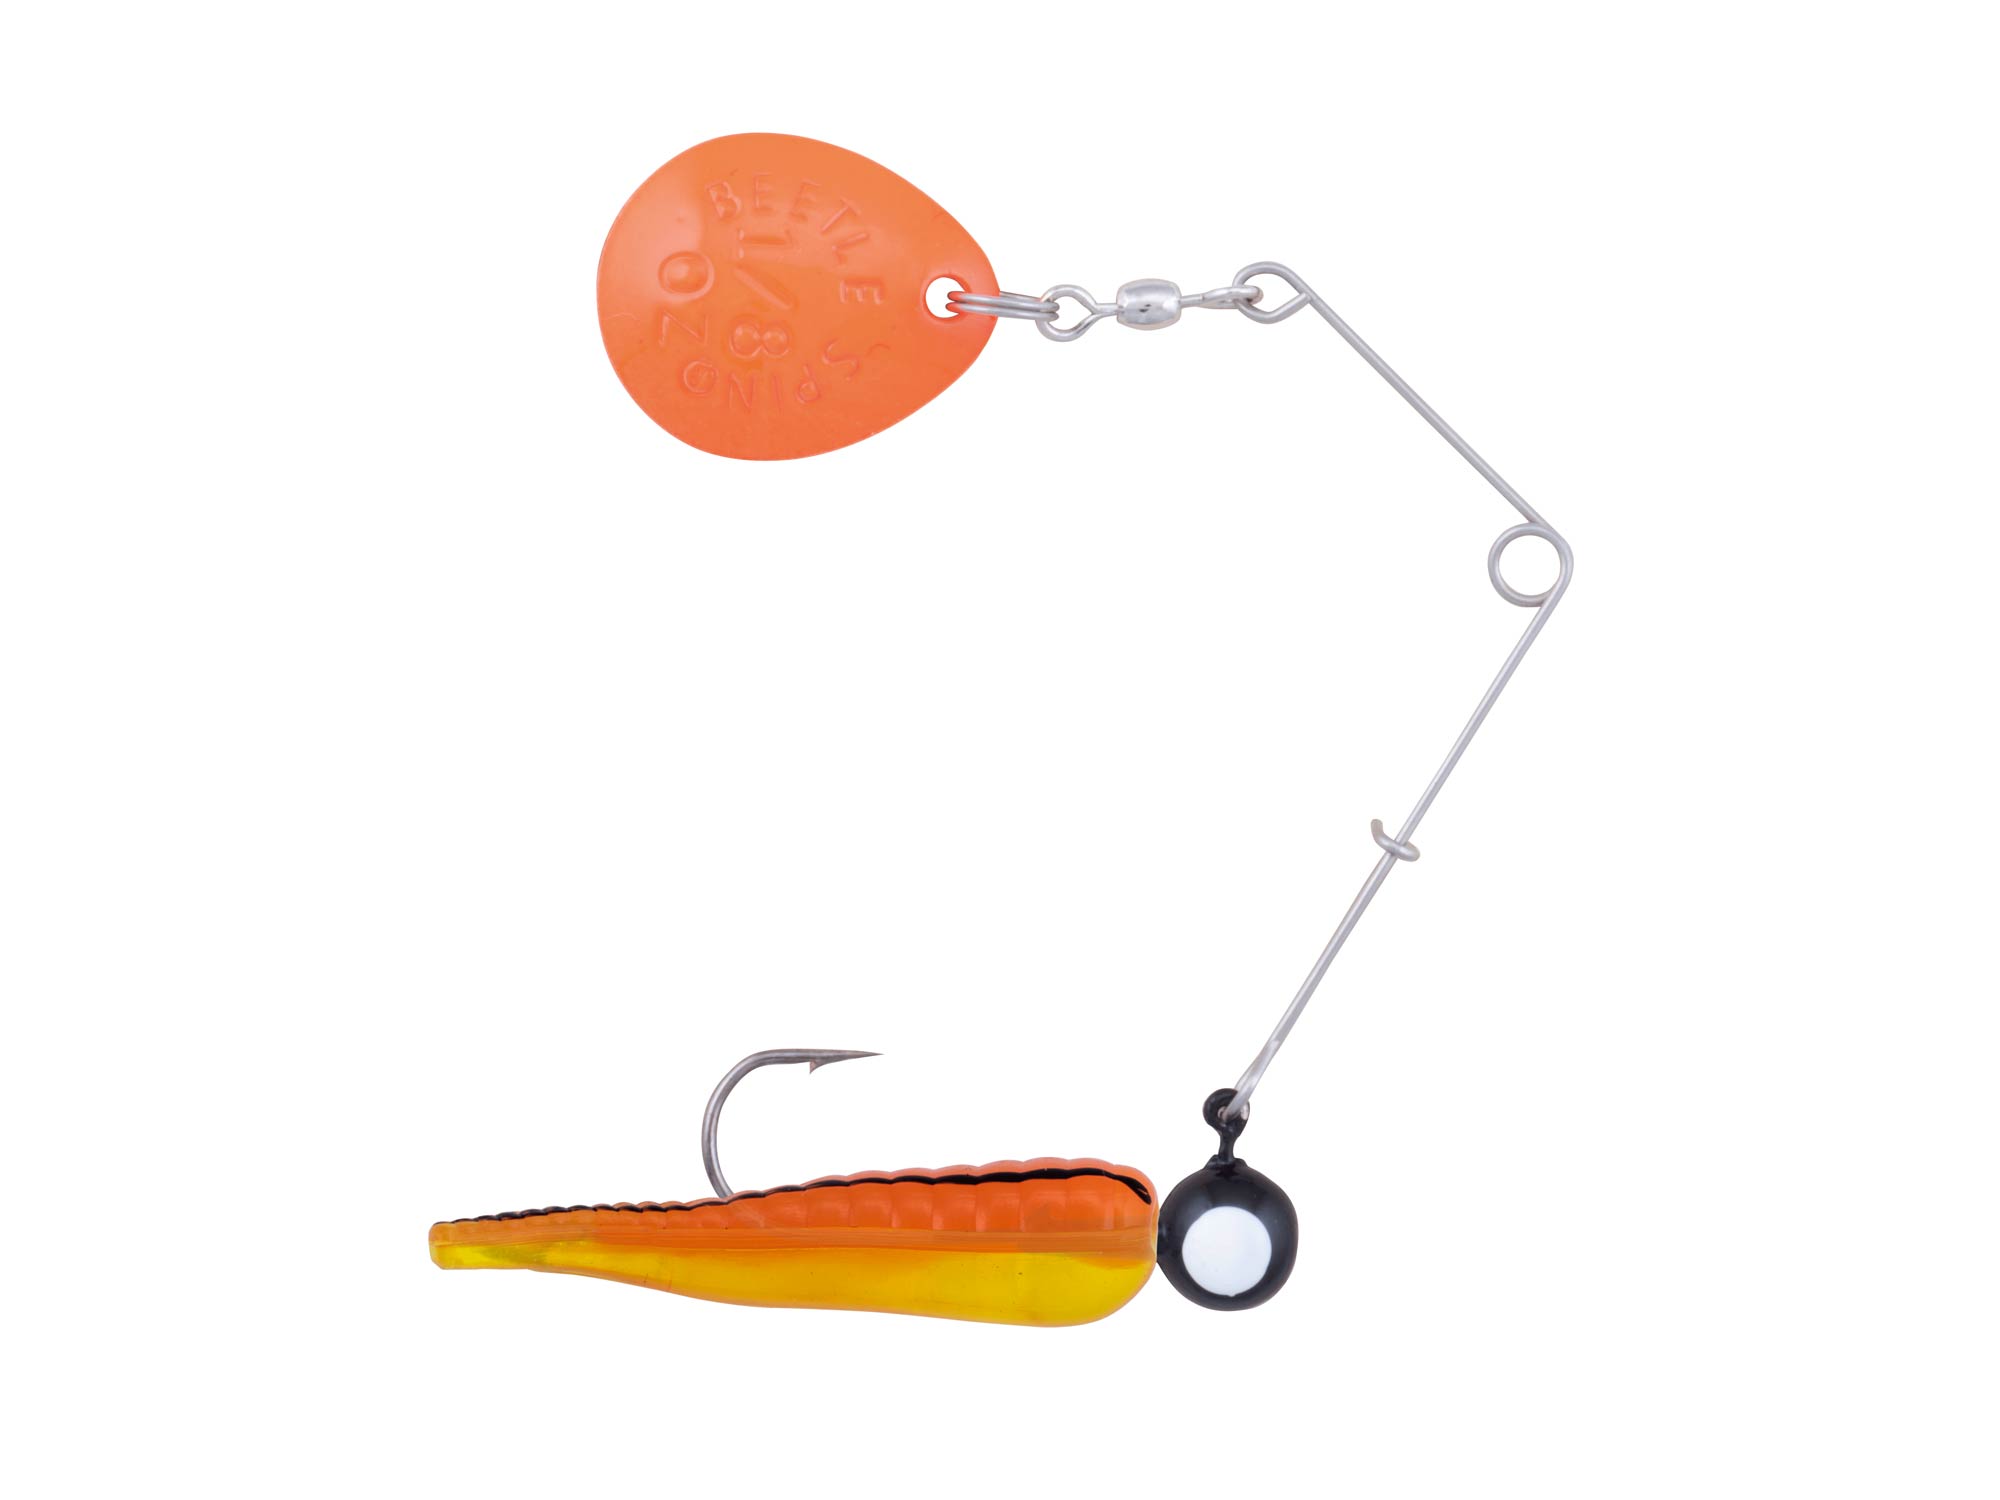 Johnson Beetle Spin® Nickel Blade - Pure Fishing